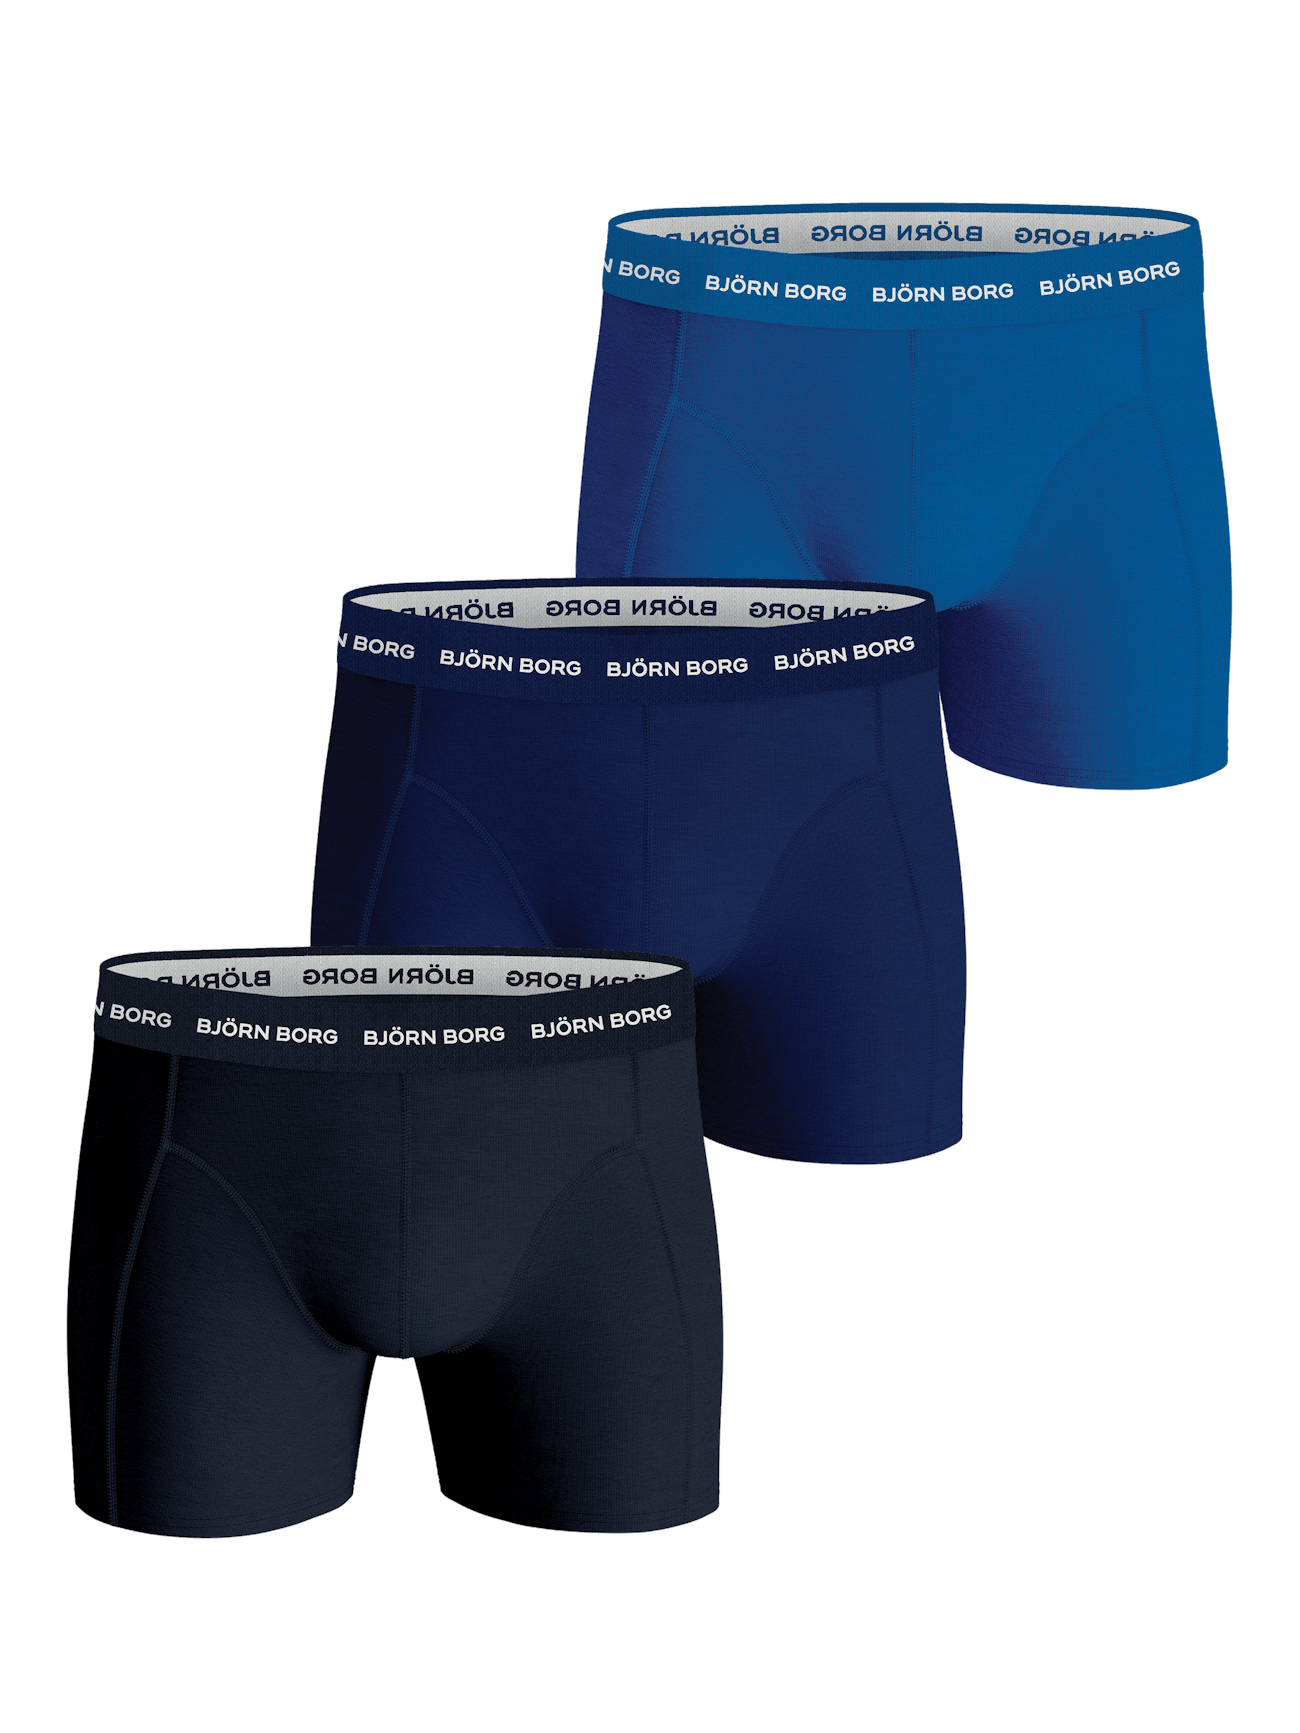 Björn Borg - Men's Boxer Shorts / Men's Underwear / Performance